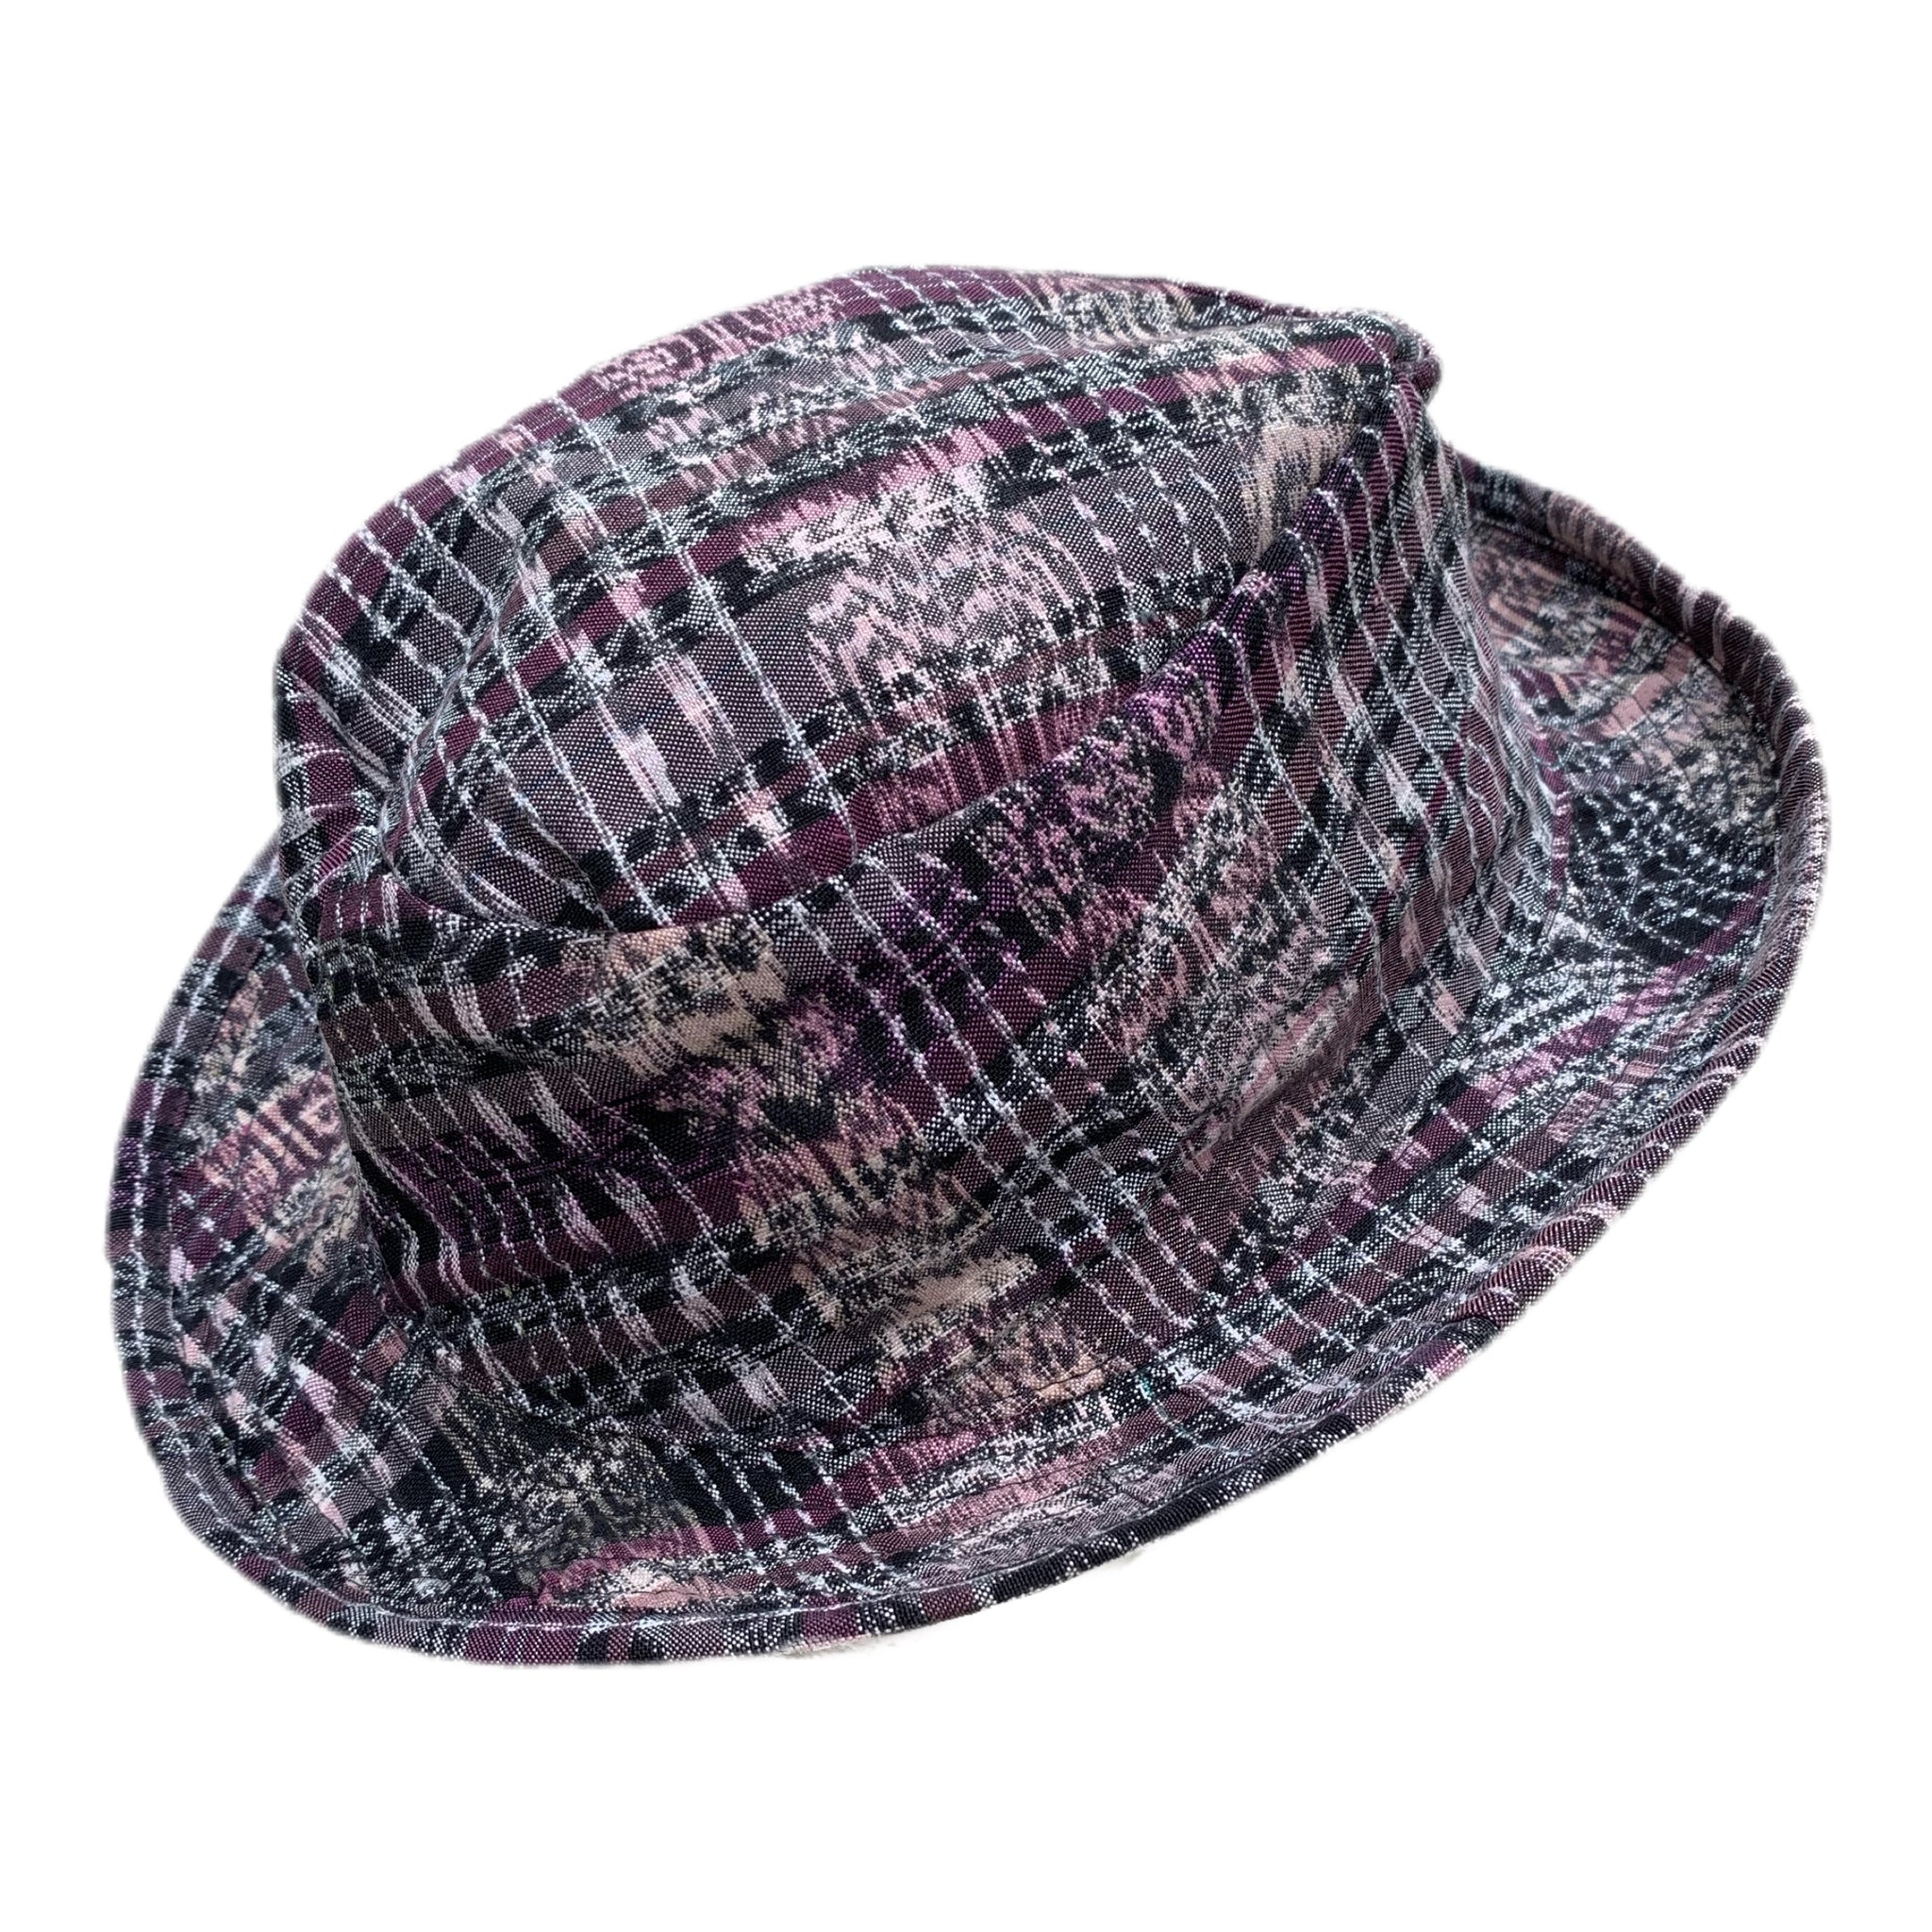 Handmade Guatemalan Corte Fabric Fedora Style Hat - Size XLarge Collection